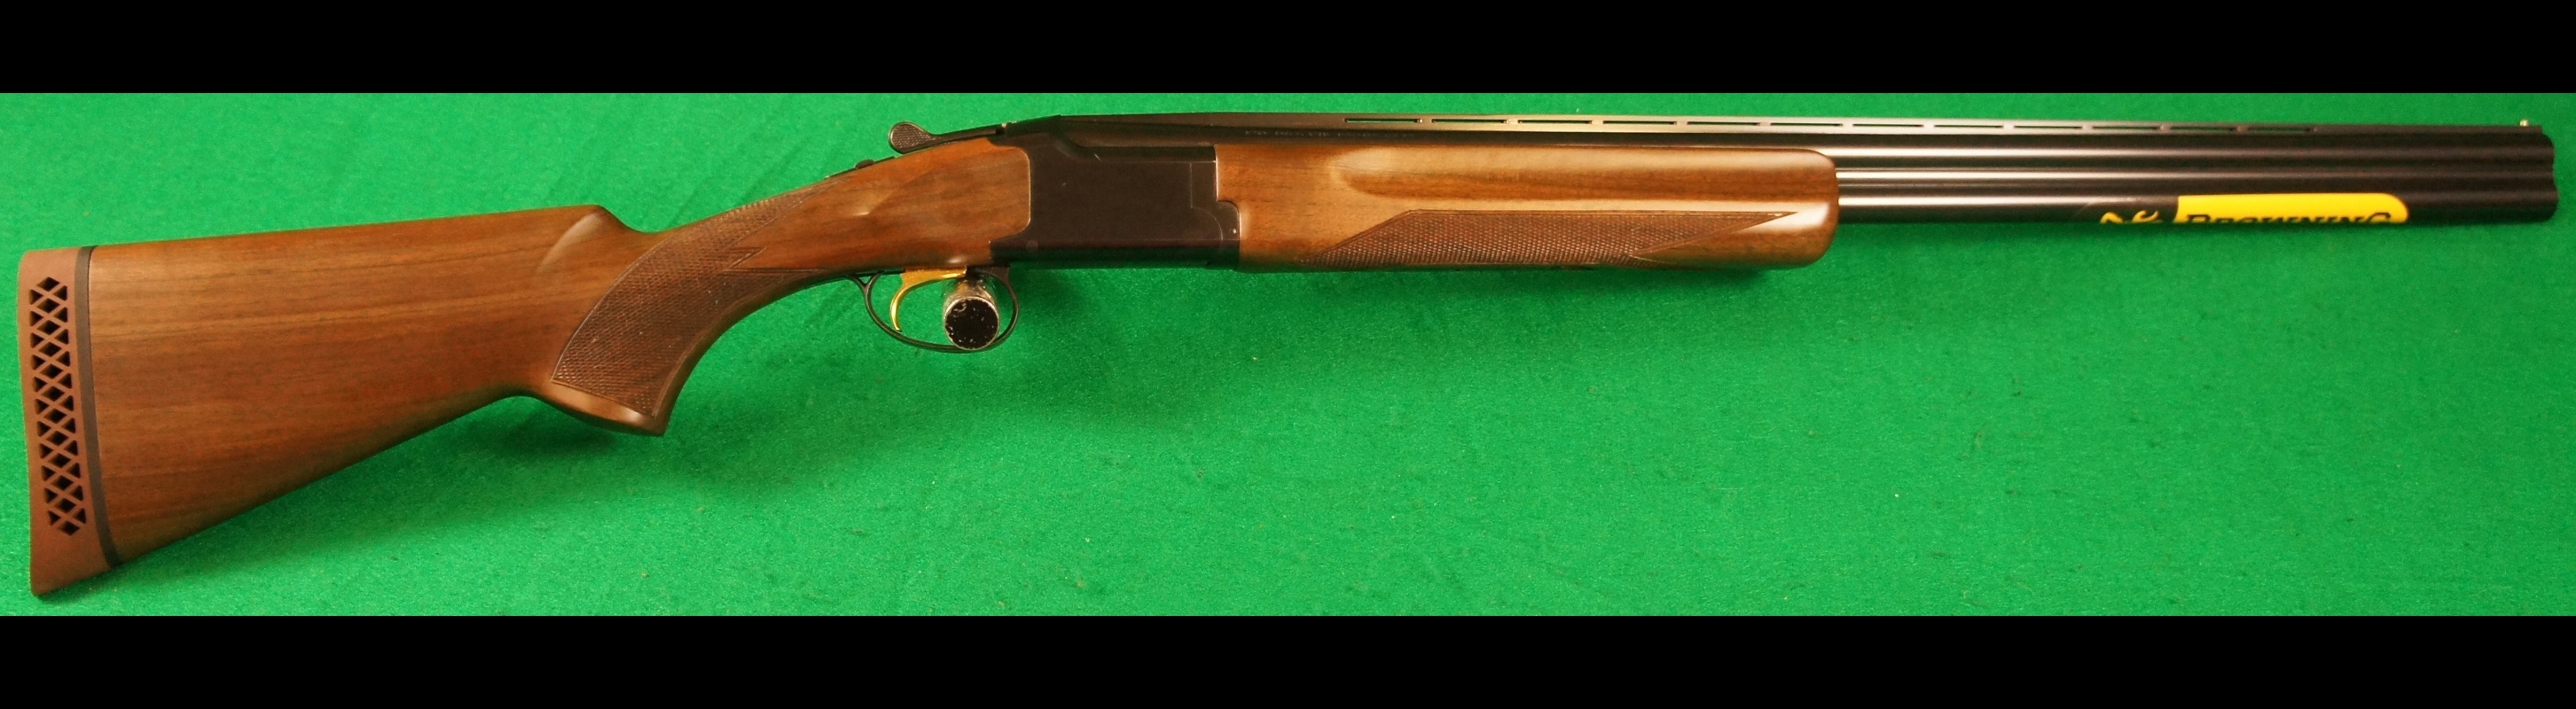 Weapons Shotgun 2905x800